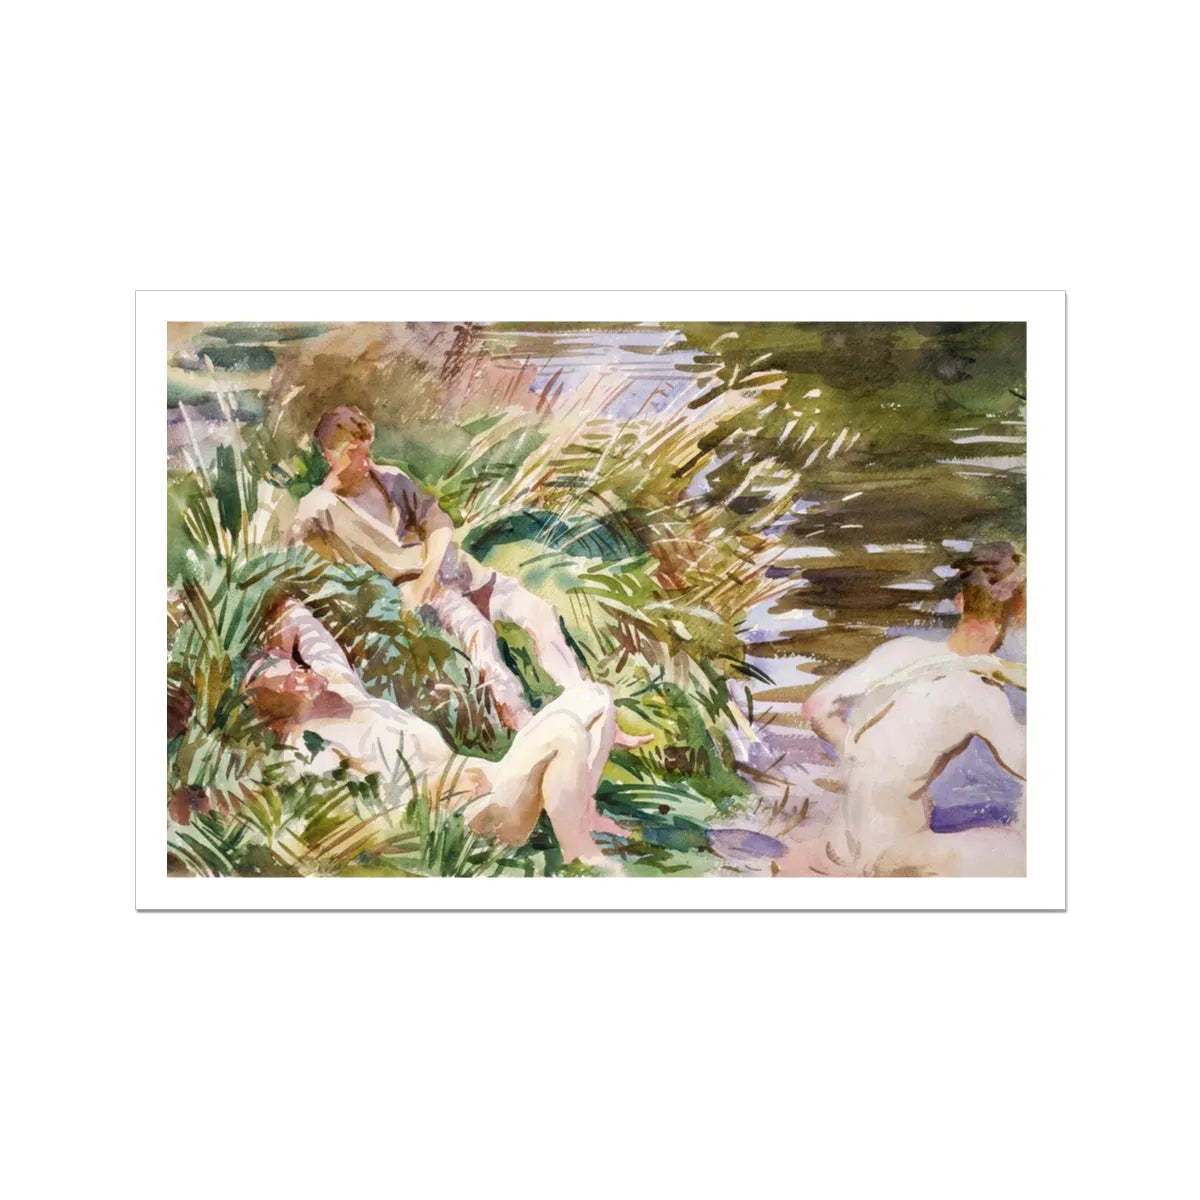 Tommies Bathing By John Singer Sargent Fine Art Print - Posters Prints & Visual Artwork - Aesthetic Art